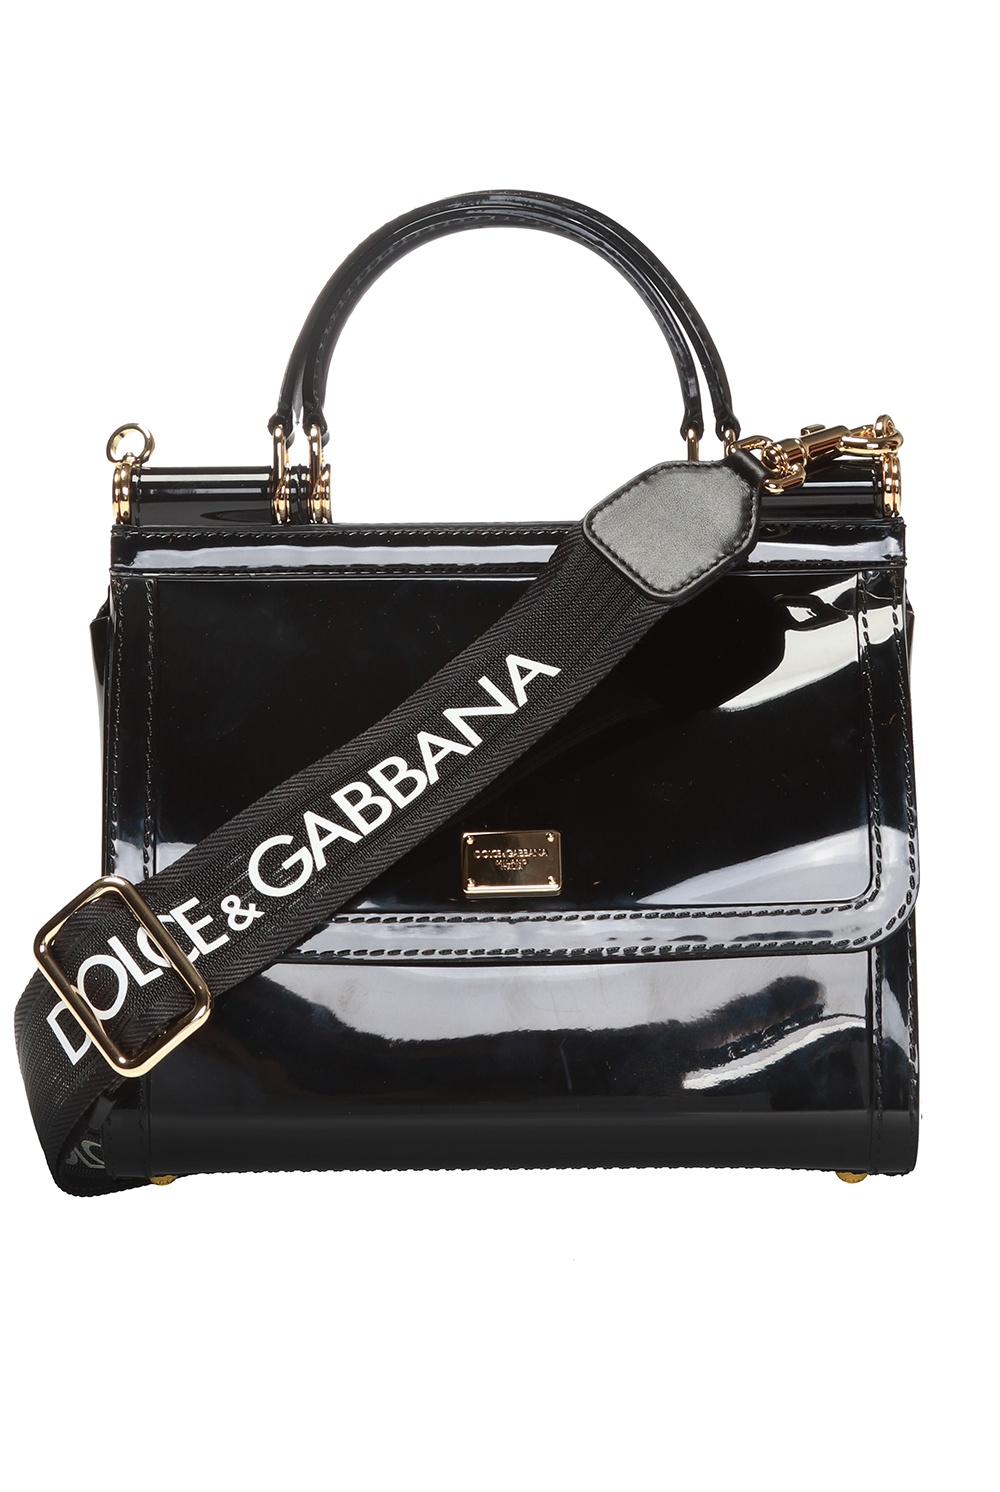 Dolce & Gabbana 'Sicily' shoulder bag | Women's Bags | Vitkac